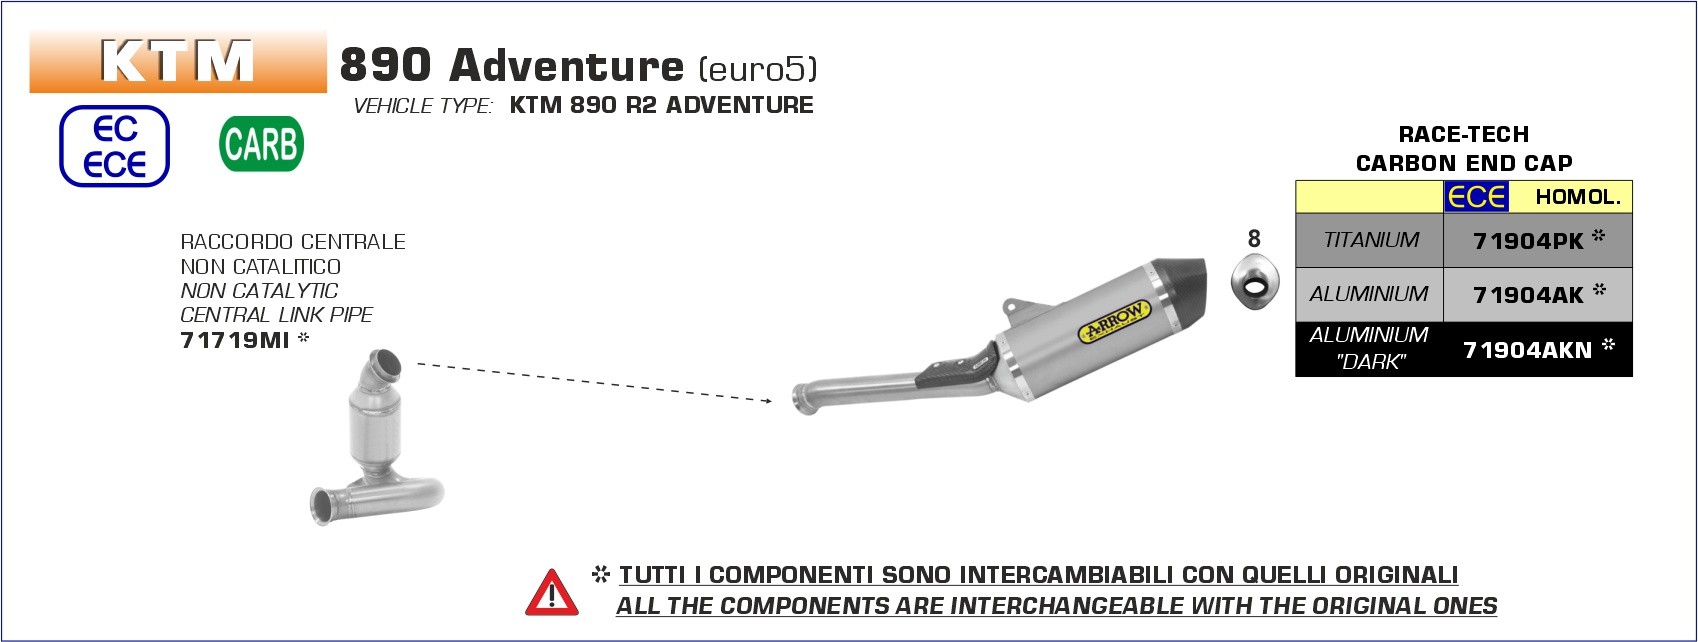 Arrow Race Tech Aluminum " Dark " Slip On Muffler With Carbon End Cap - 2021 KTM 890 Adventure